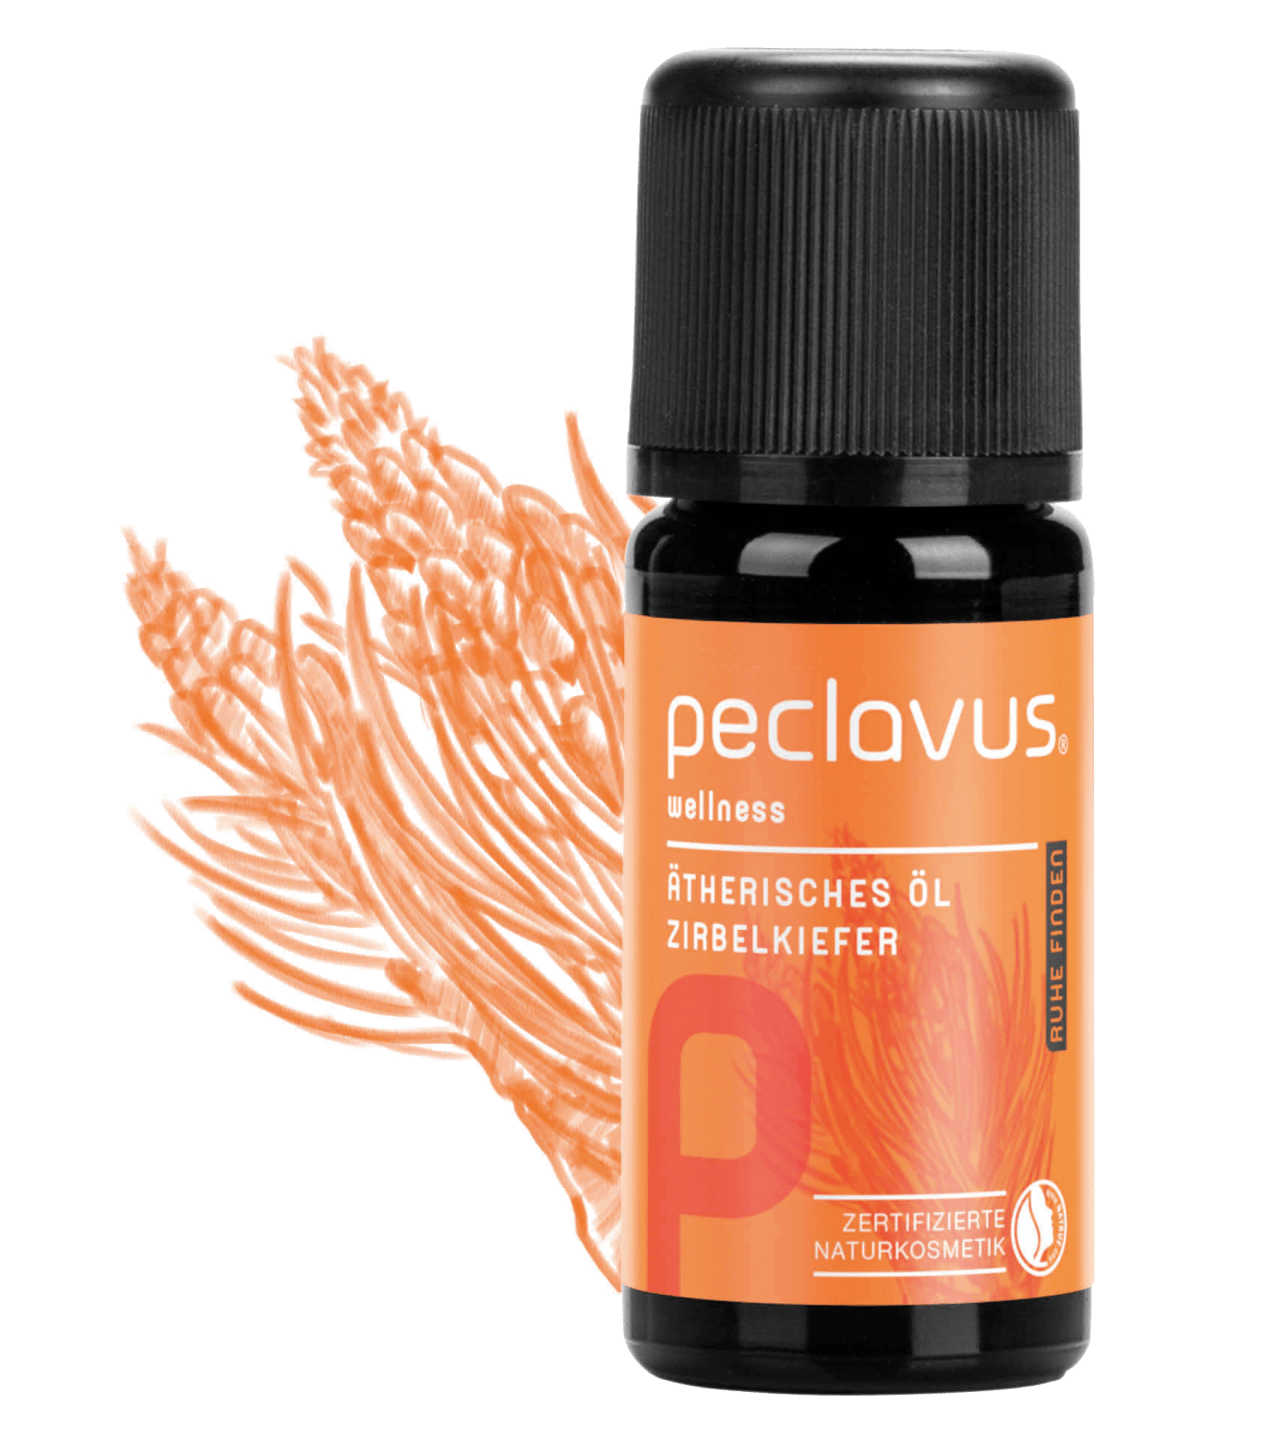 peclavus - Ätherisches Öl Zirbelkiefer, 10 ml